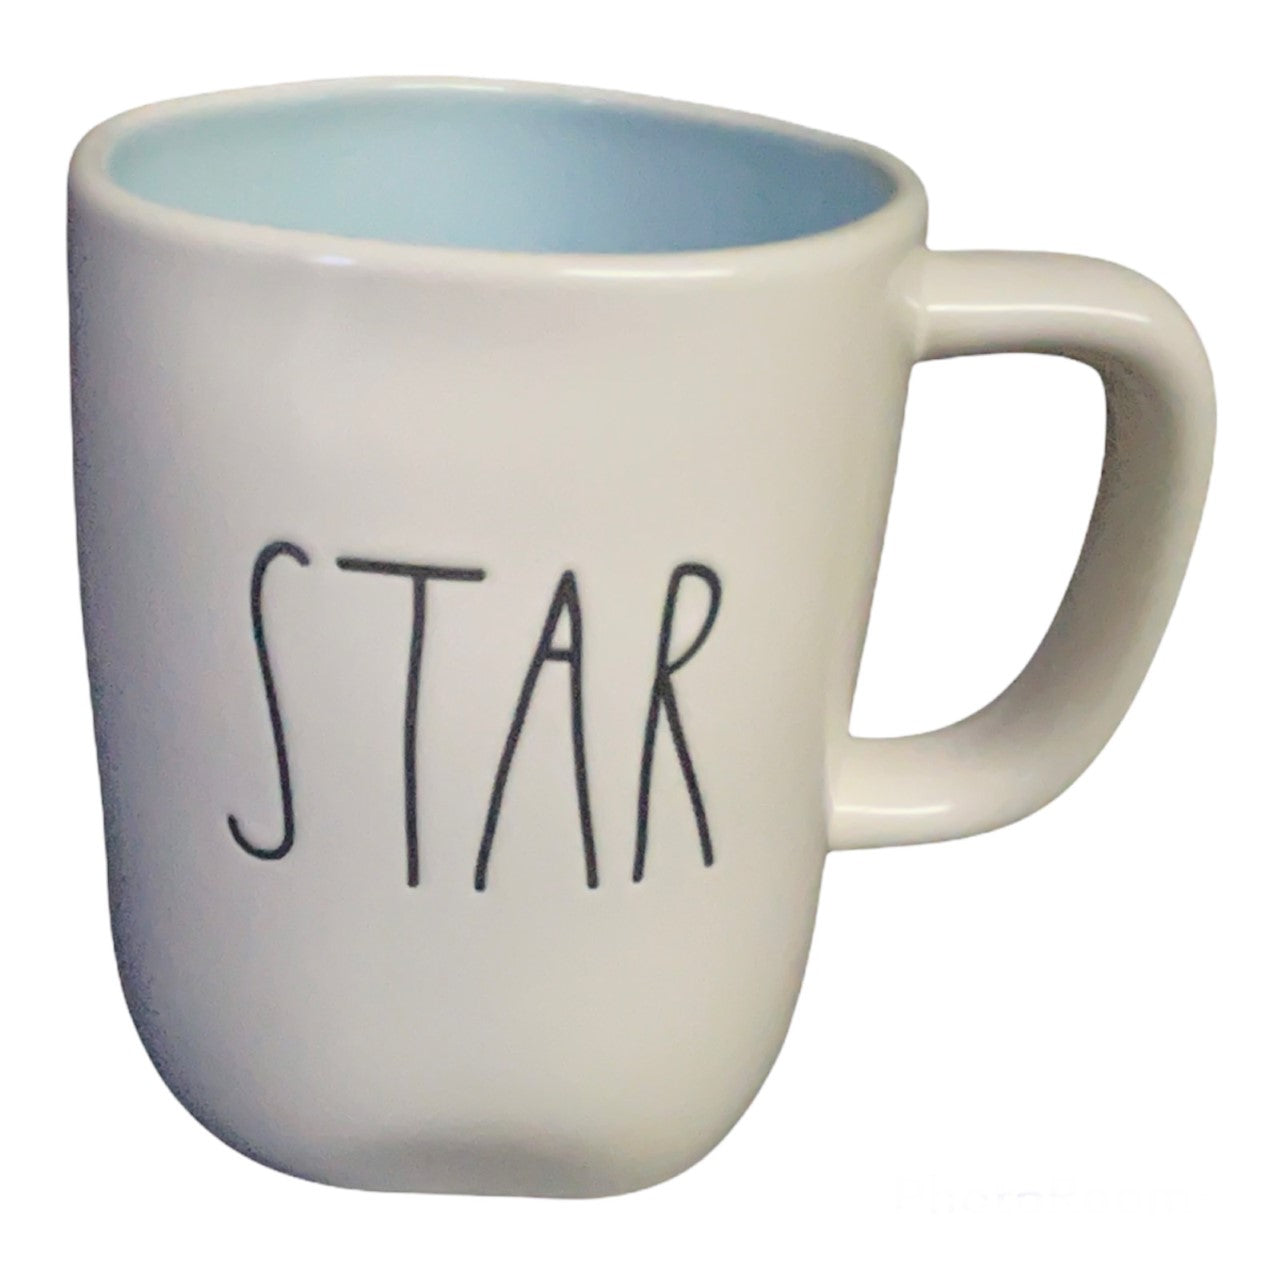 Rae Dunn Star Mug - blue Interior - Coffee mug